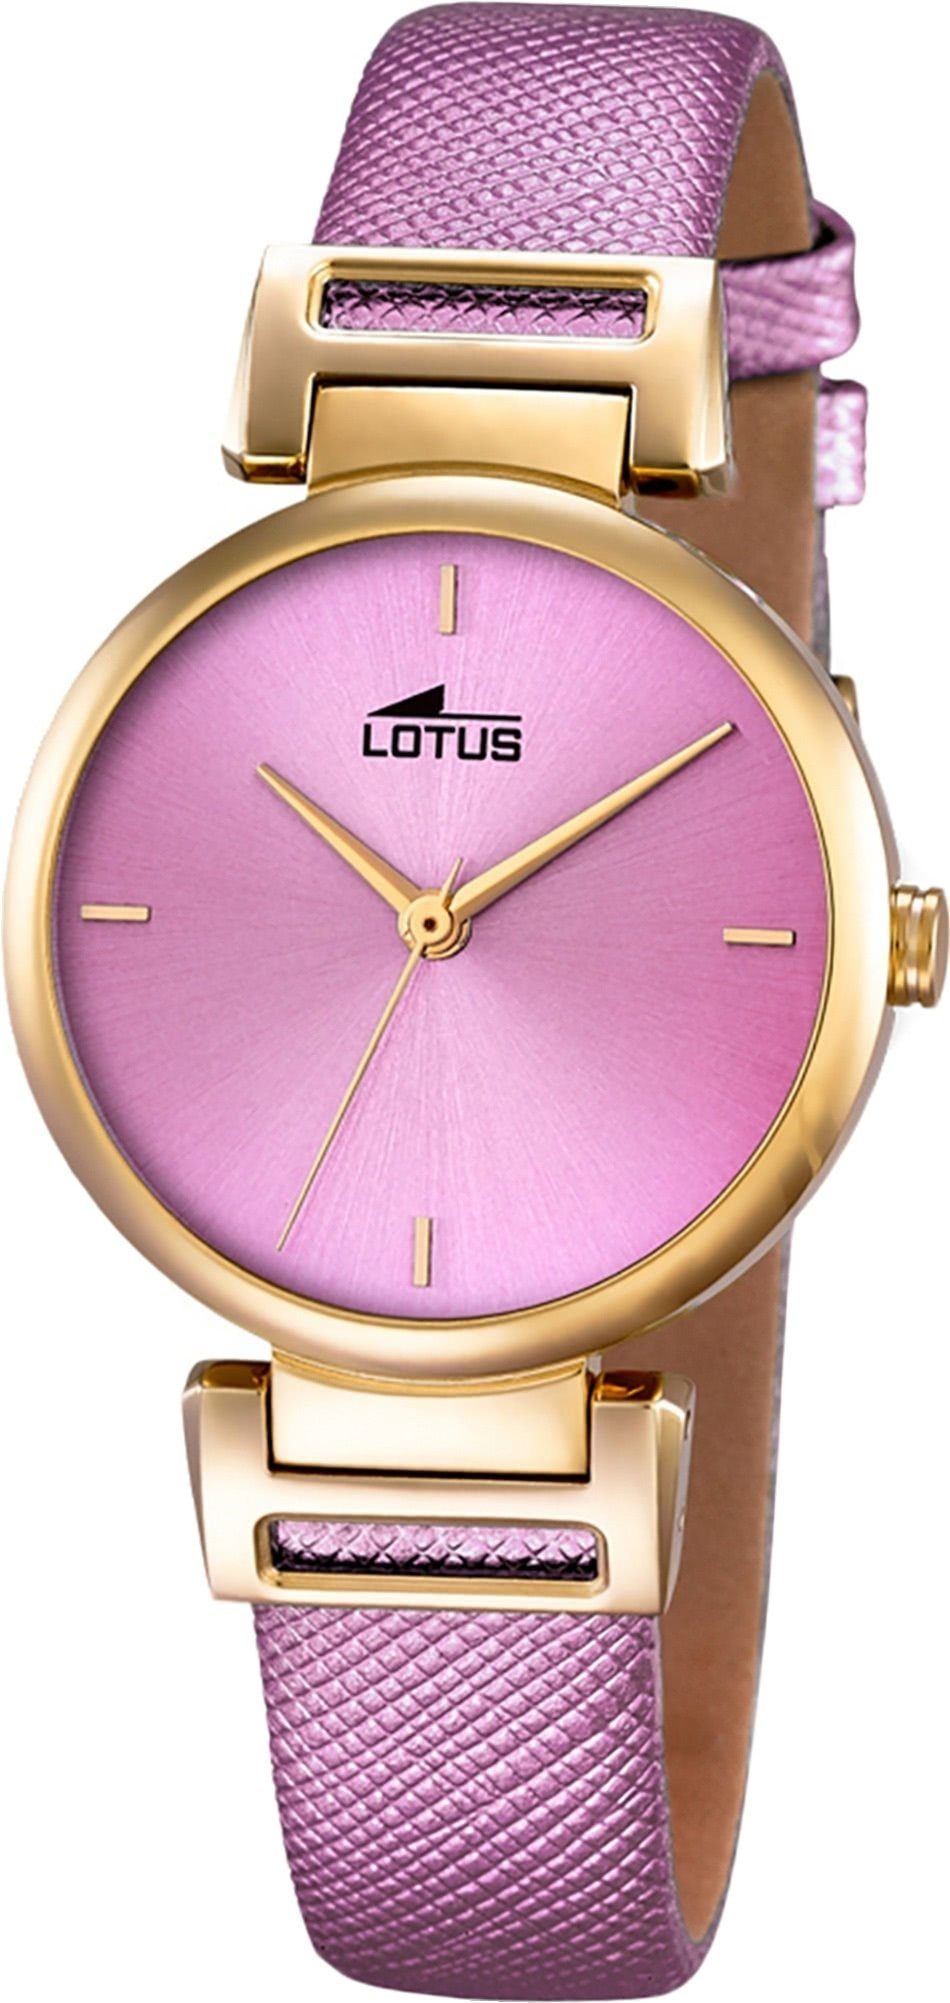 Damen Uhren Lotus Quarzuhr D2UL18228/2 Lotus Leder Analog Damen Uhr L18228/2, Damenuhr mit Lederarmband, rundes Gehäuse, mittel 